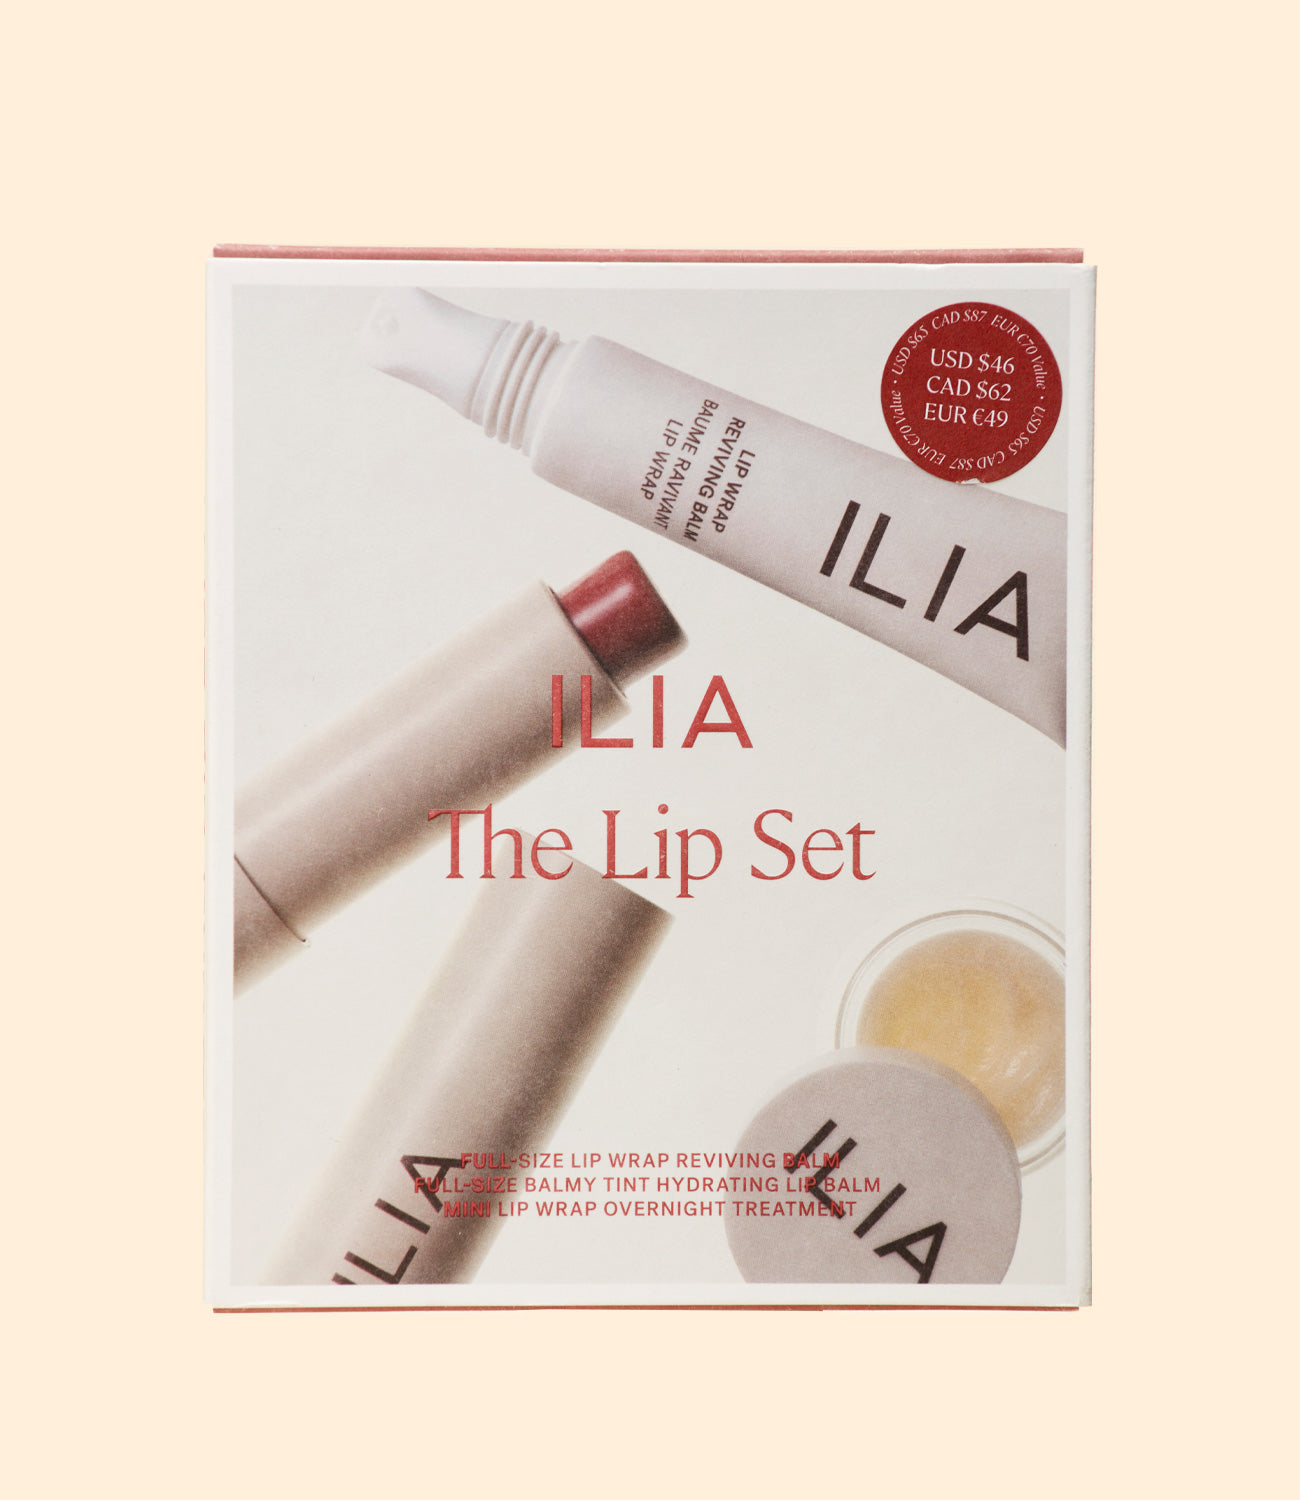 coffret Lip Set par Ilia Beauty avec lip wrap reviving balm, balmy tint hydrating lip balm, lip wrap overnight treatment